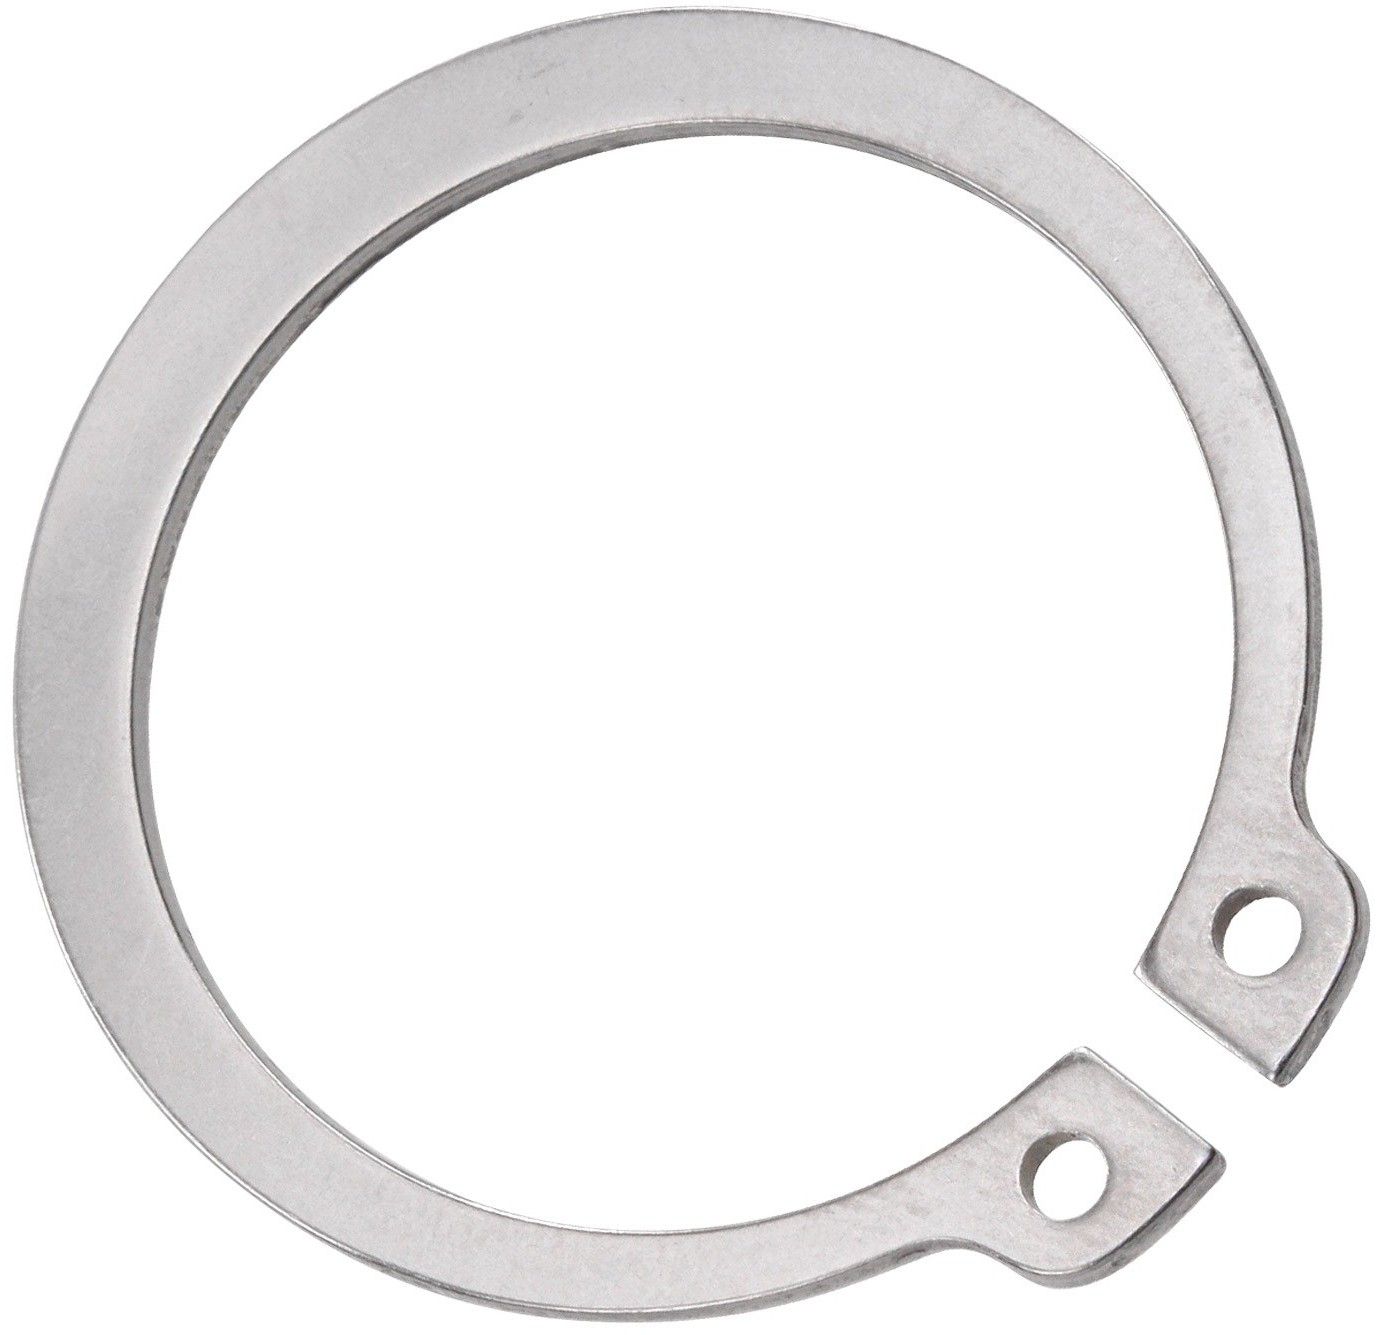 Кольцо стопорное наружное 125х4 DIN 471, нержавеющая сталь 1.4122 (А2) - фото